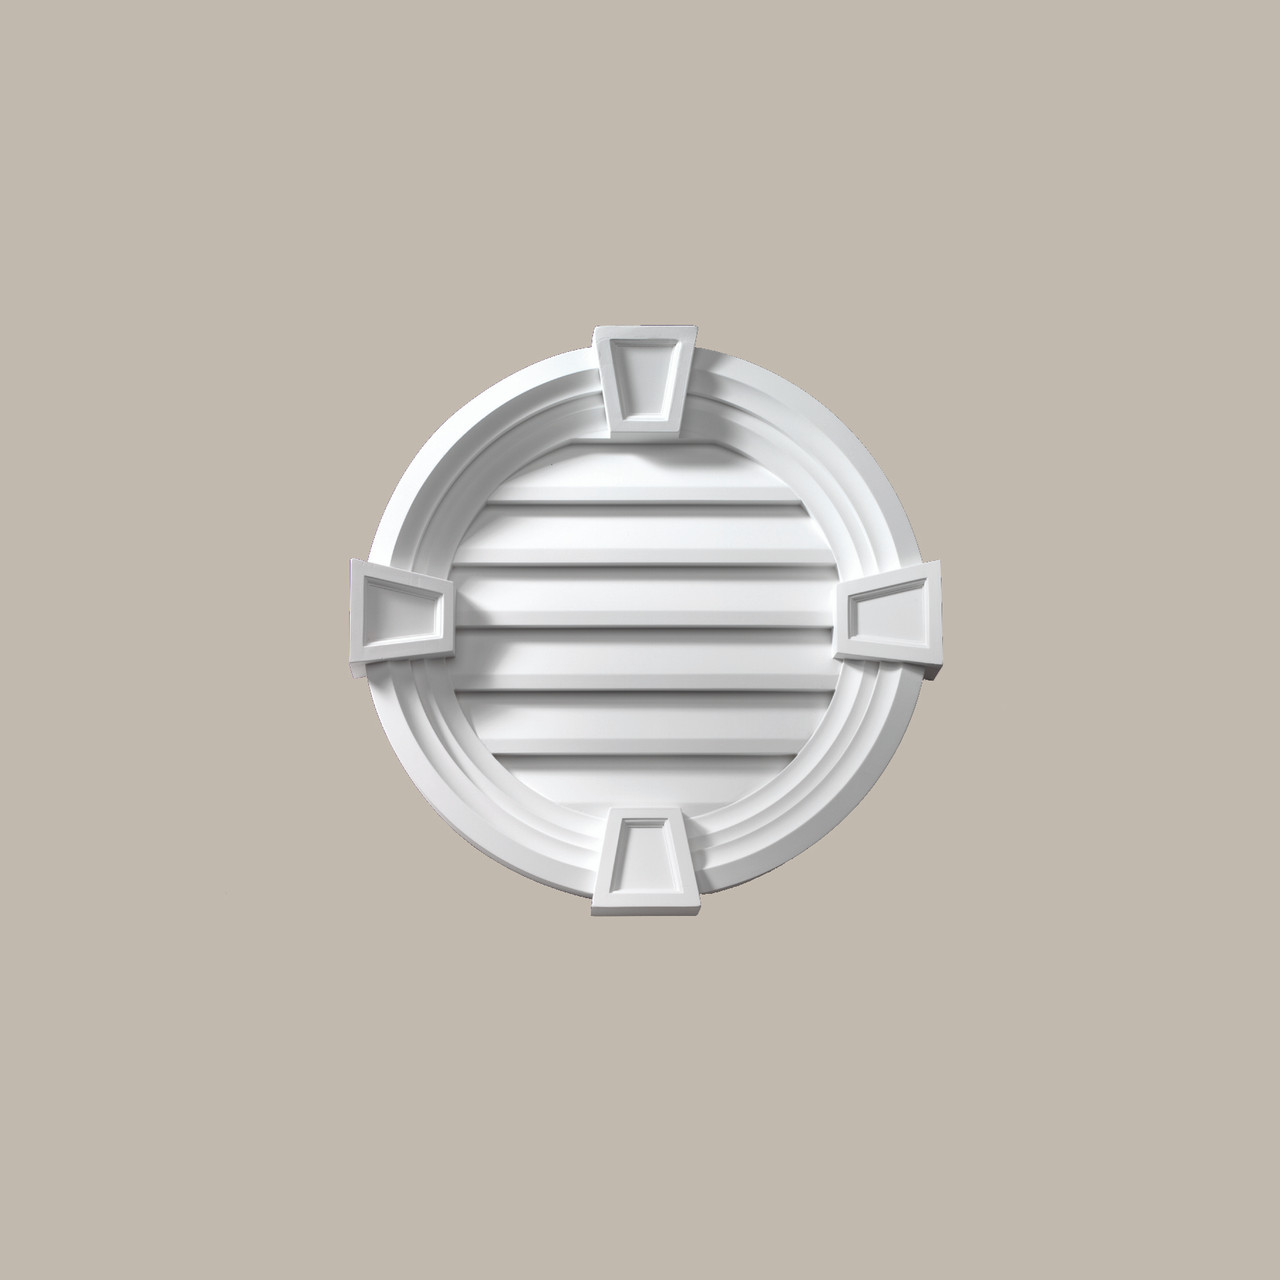 RLV24MTK Decorative Standard Keystone Round Louver Vent with Decorative Trim - 24" Diameter